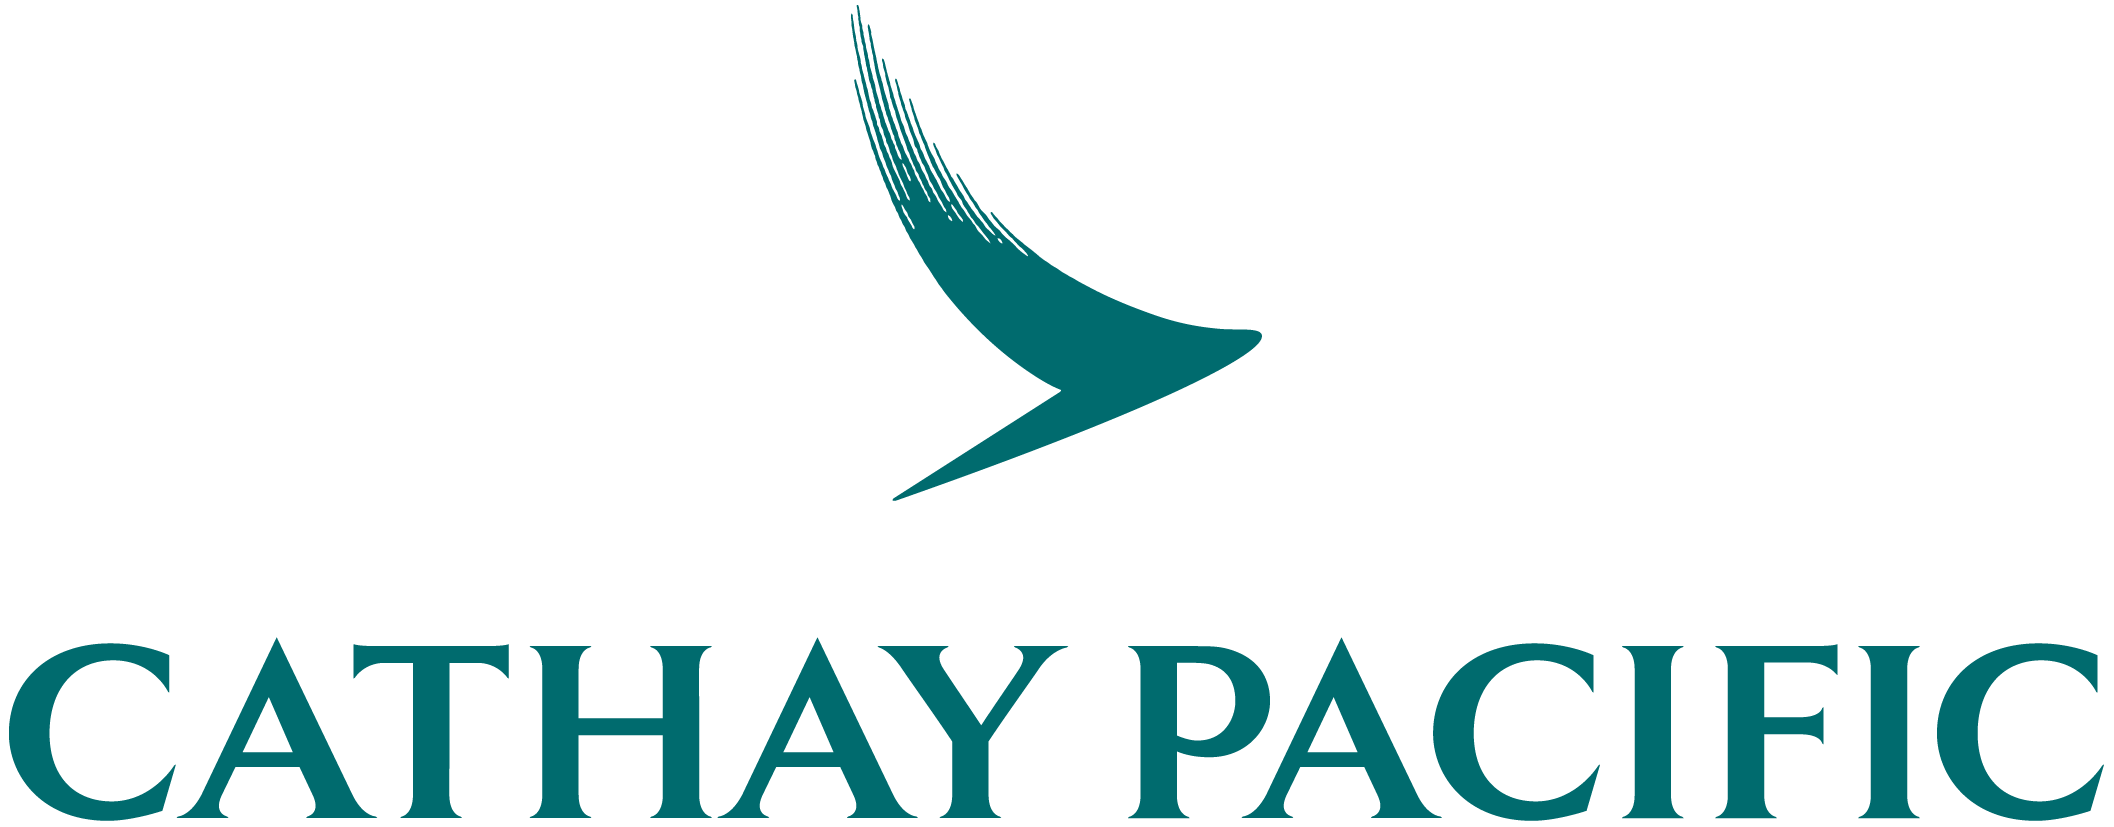 Cathay Pacific_Master Logo_Vertical Green English.png